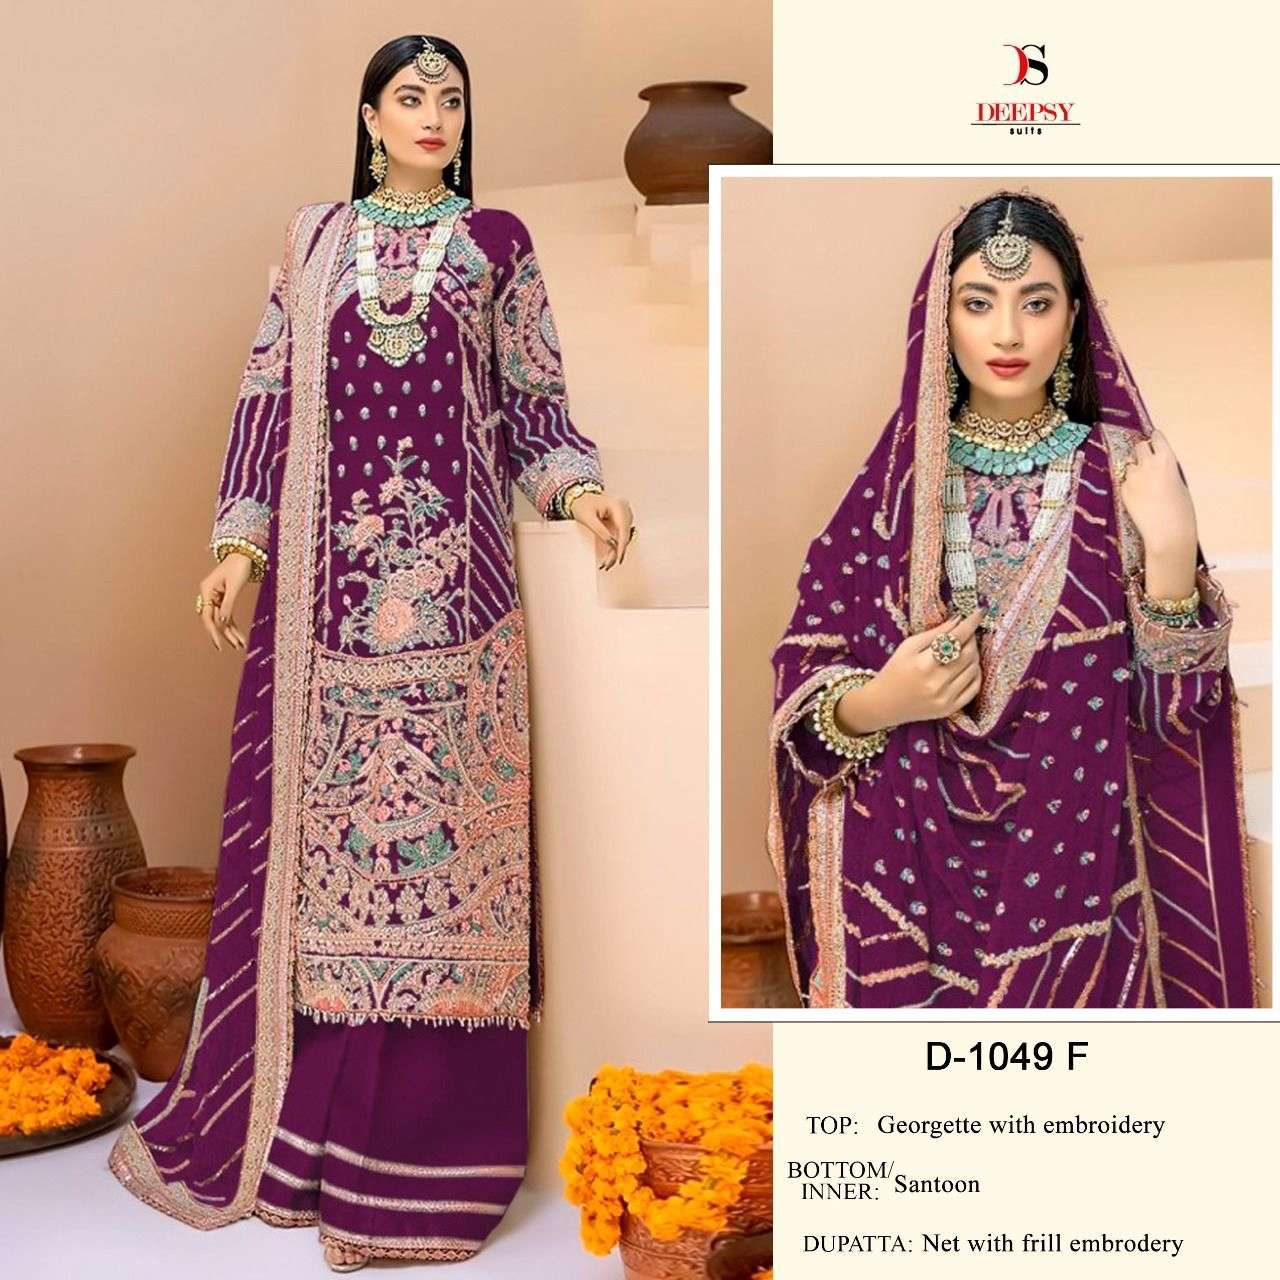 deepsy suits 1049 series bridal look designer pakistani suits wholesaler surat